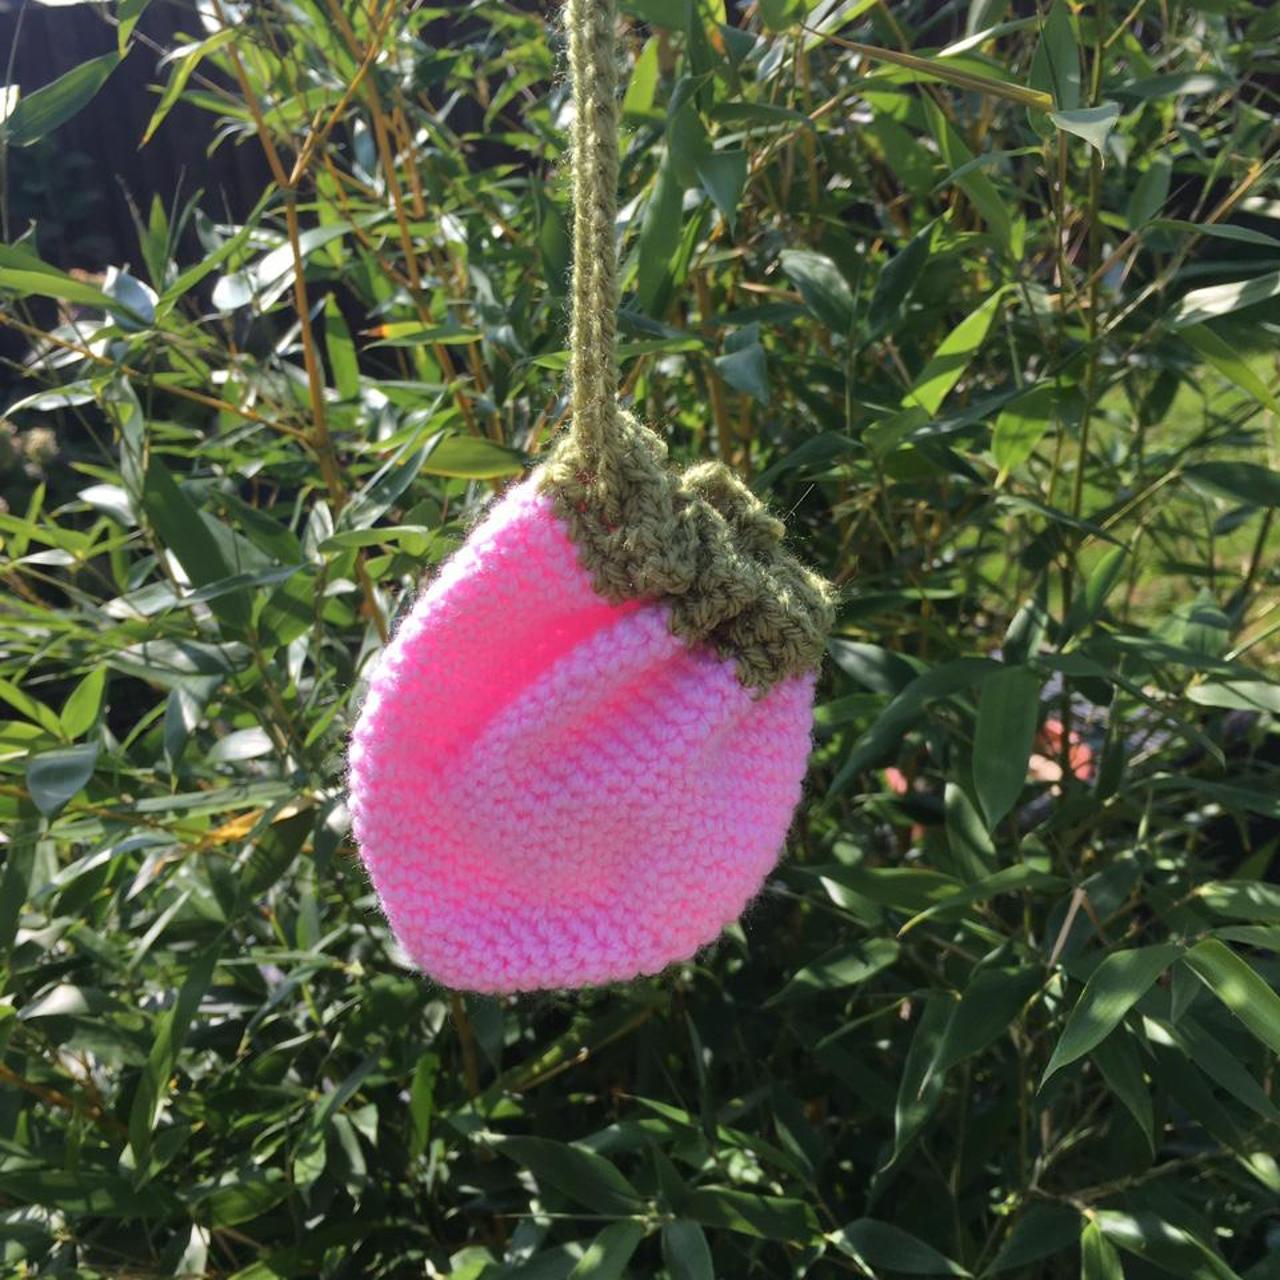 Product Image 1 - Crochet rose petal bag:)
+coin purse